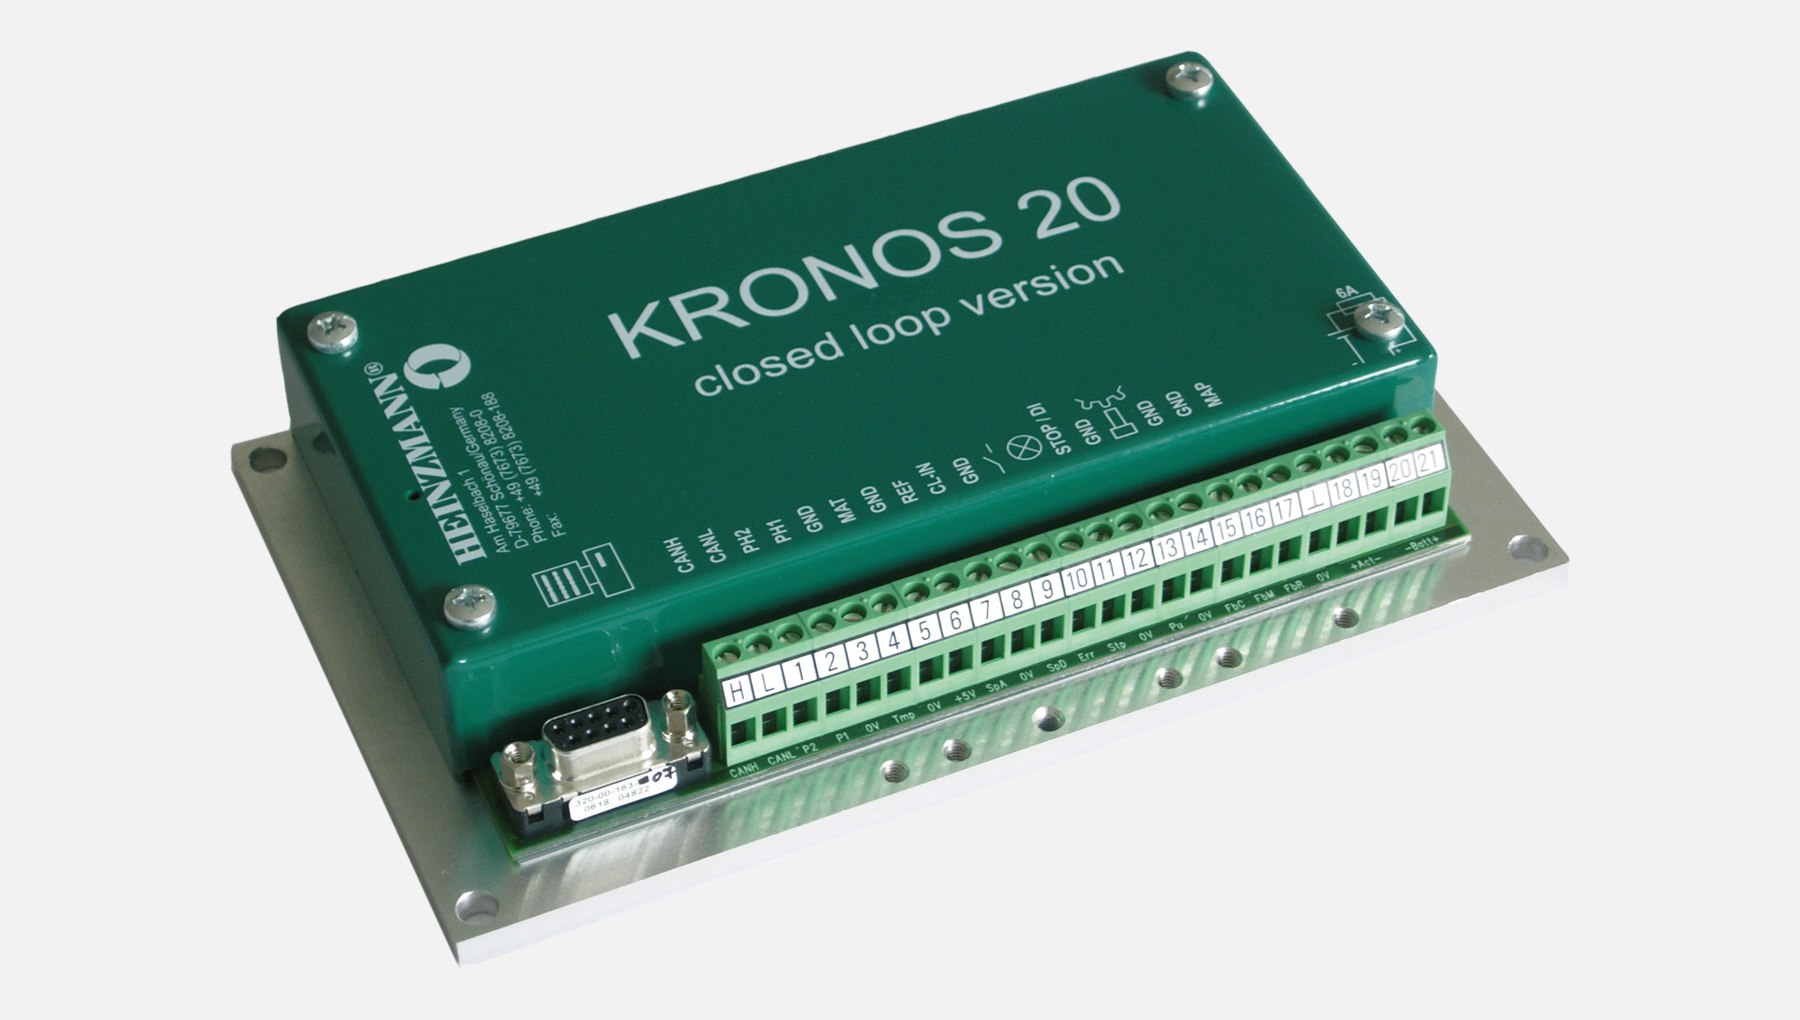 KRONOS 20 control unit